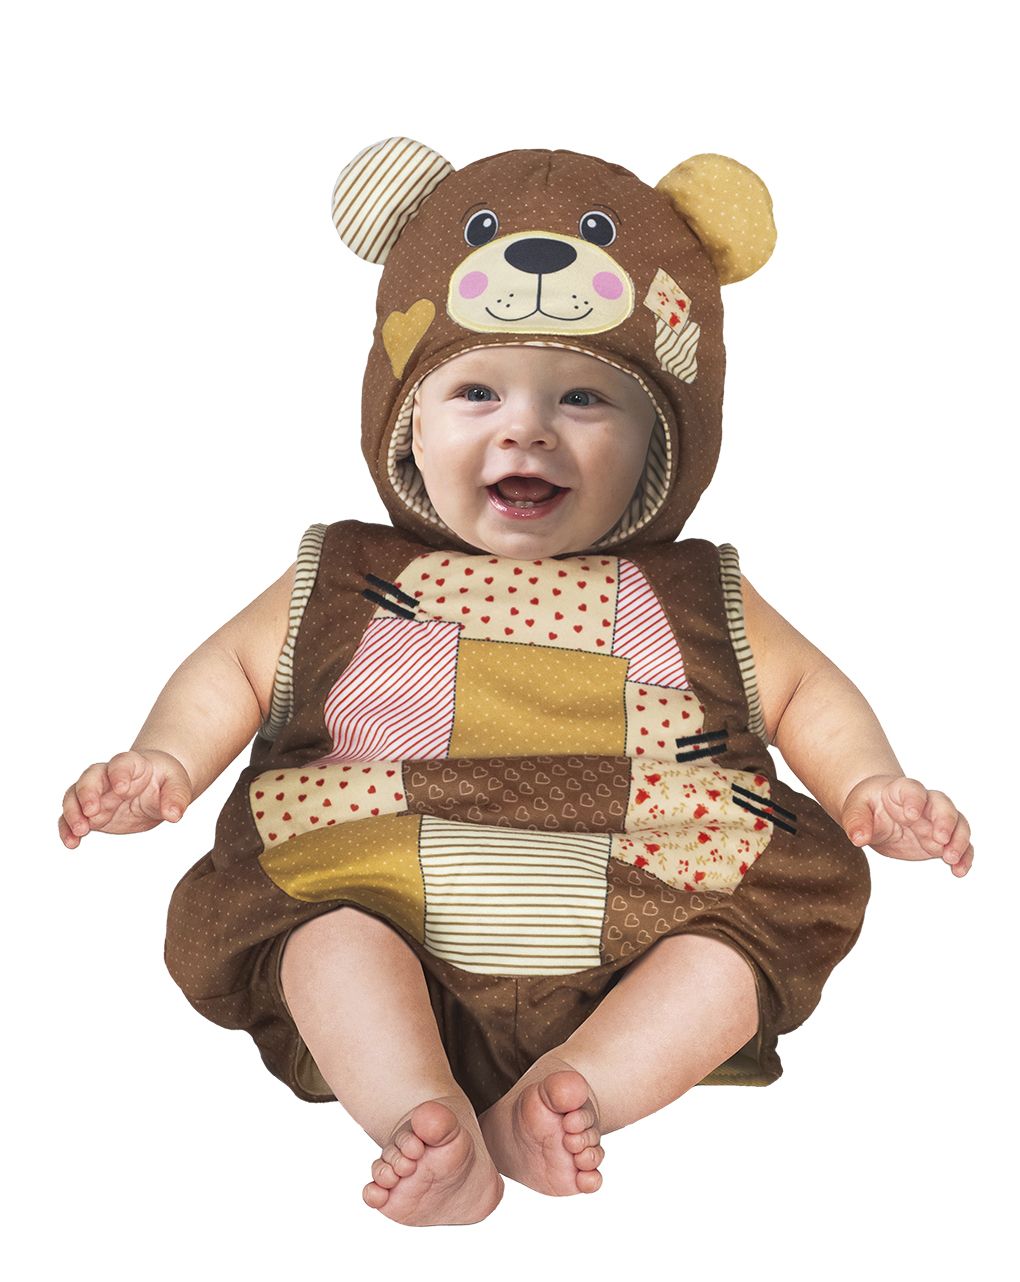 Fato de bebé urso 6-12 meses - rainha do carnaval - Carnaval Queen